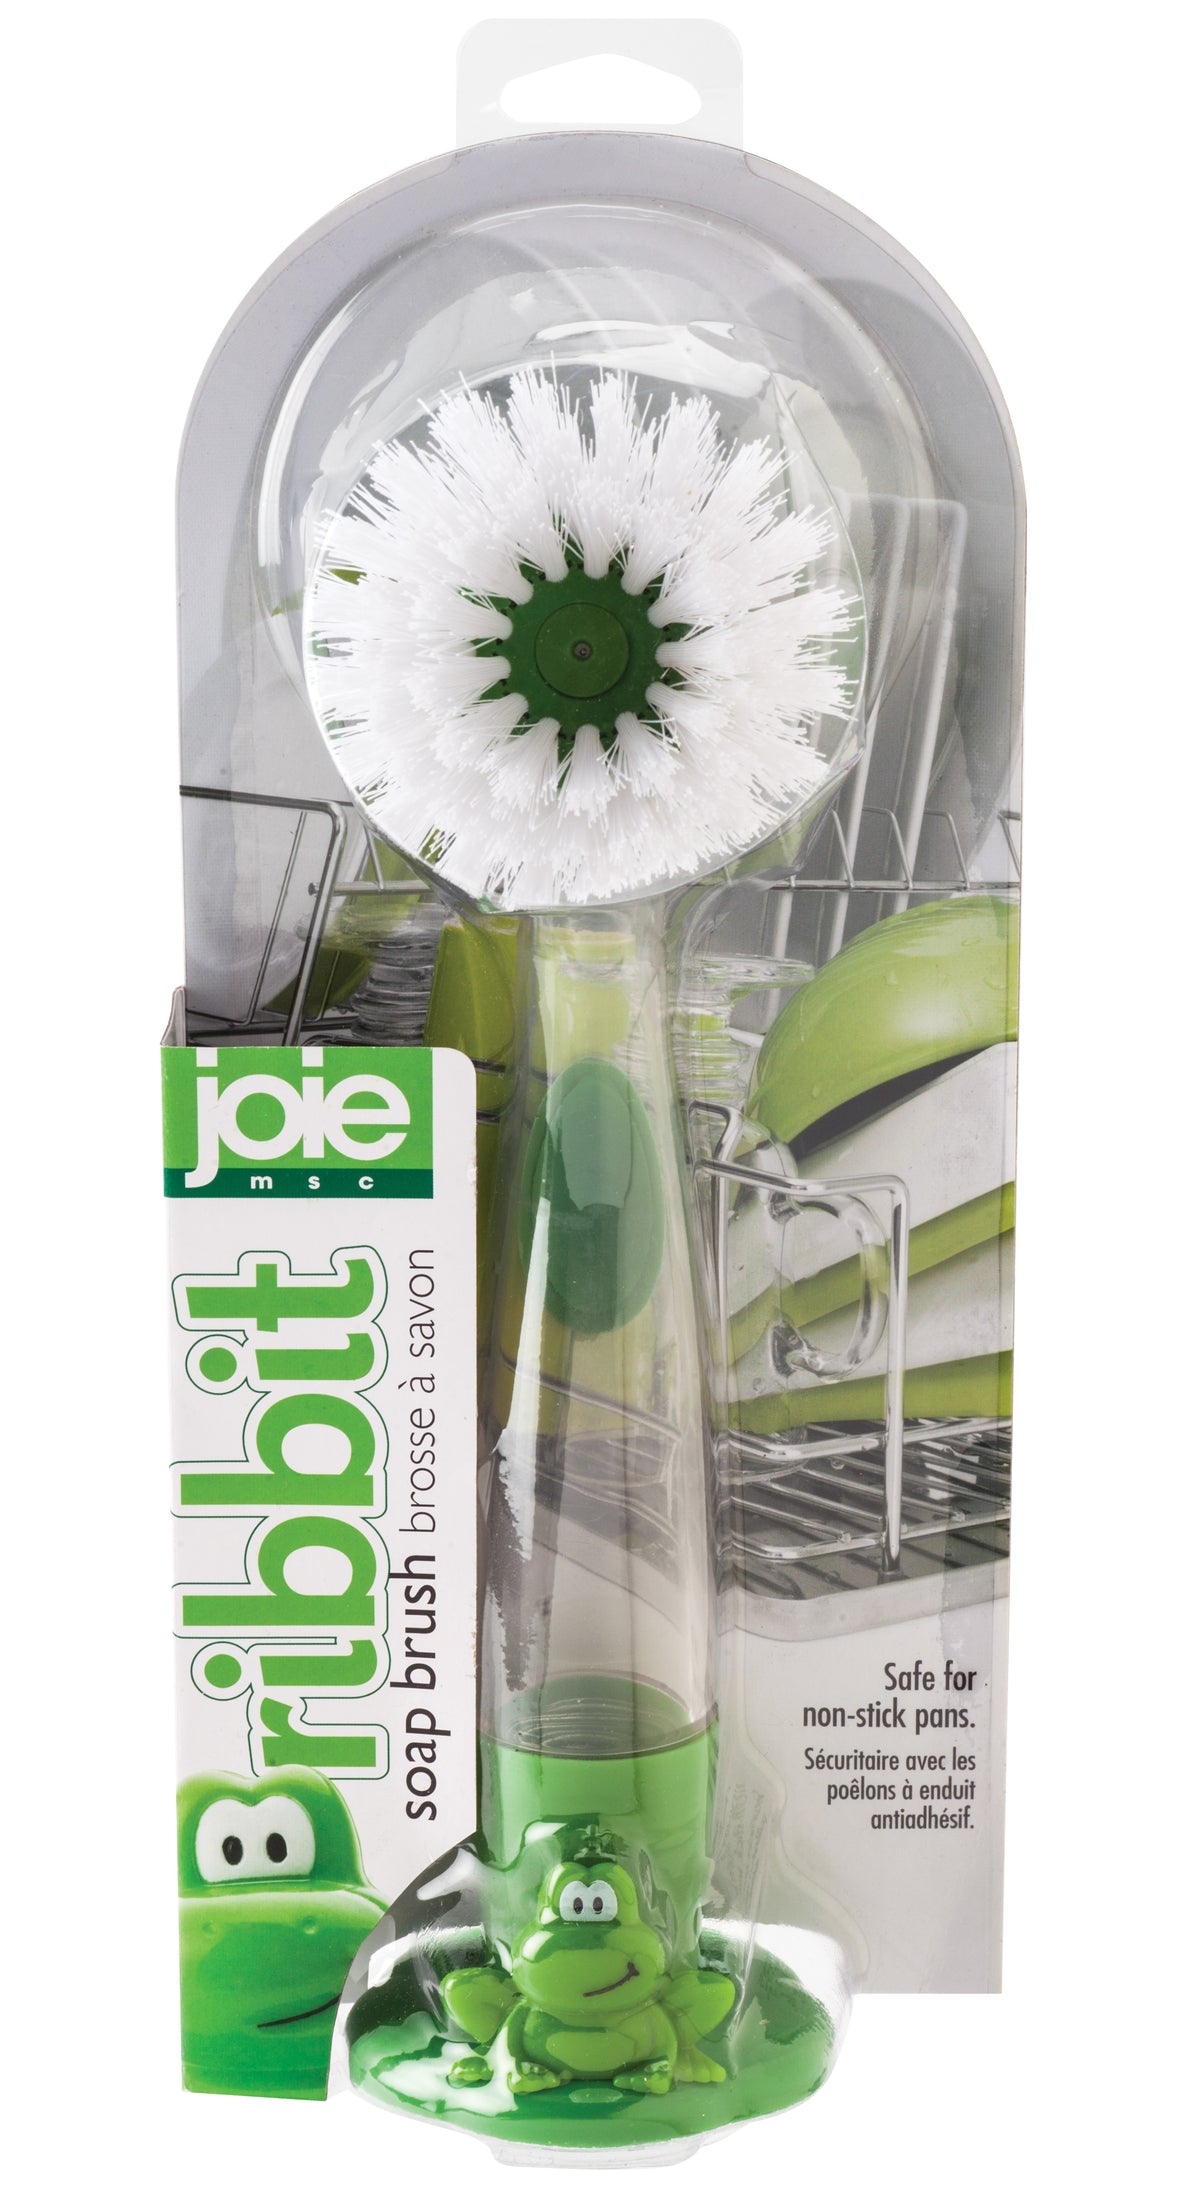 Joie MSC 10005 Ribbit Soap Brush